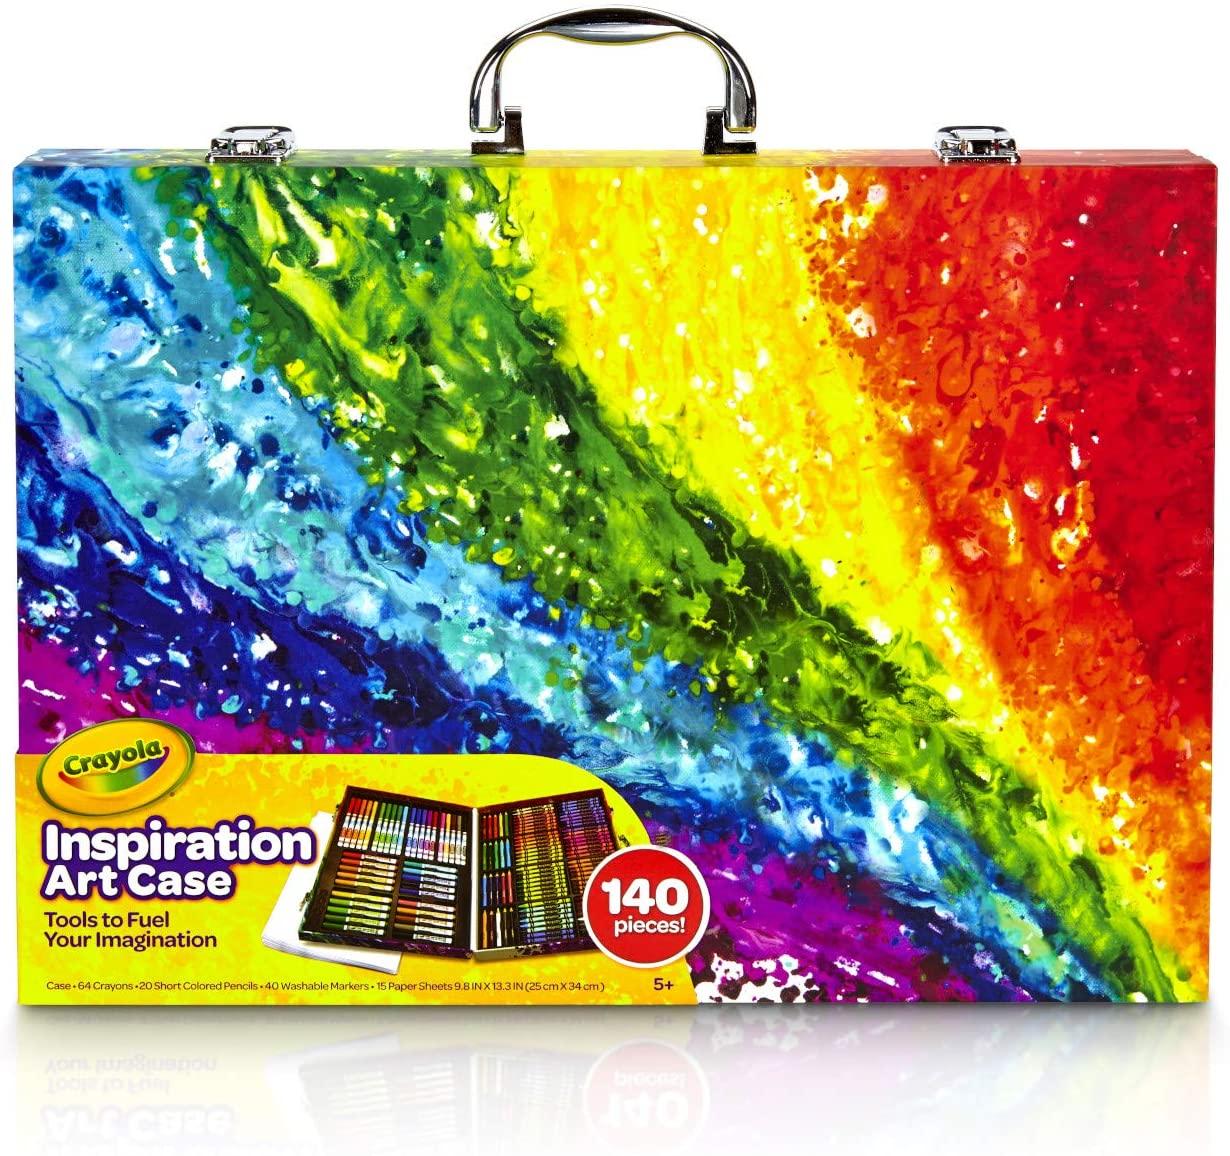 Crayola Inspiration Art Case Coloring Set for $14.99